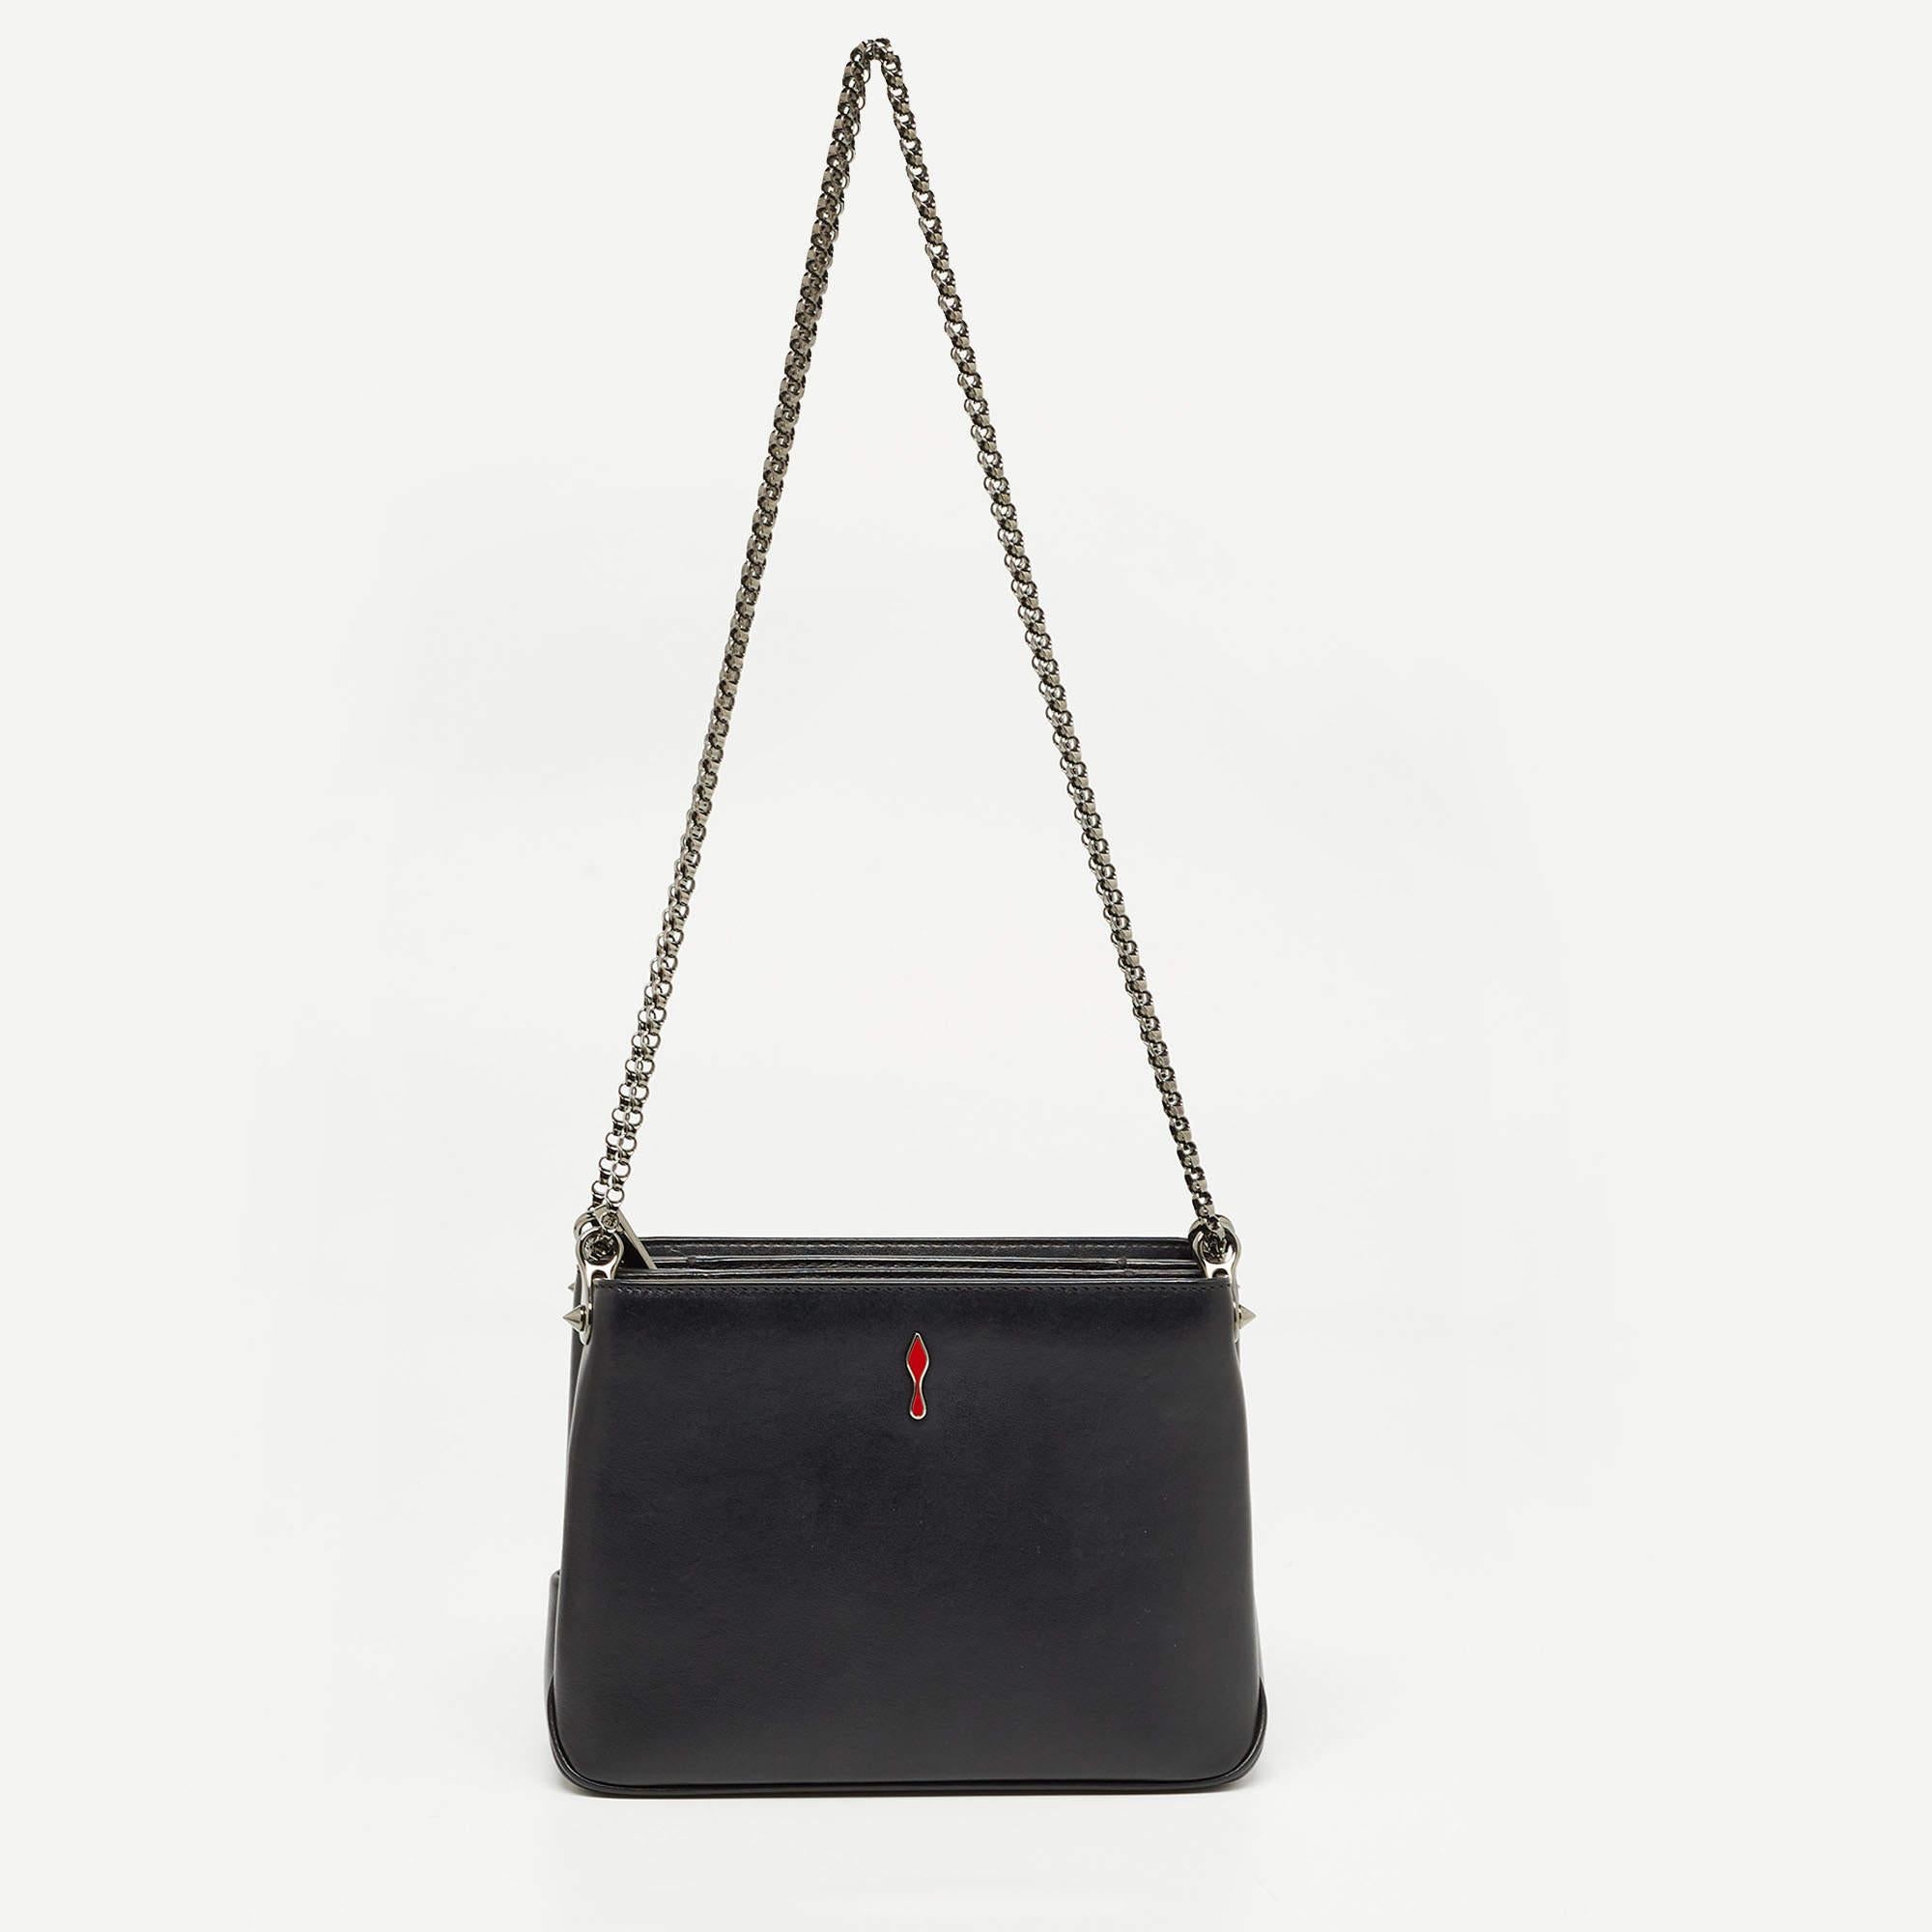 Christian Louboutin Black Leather Triloubi Chain Shoulder Bag For Sale 3